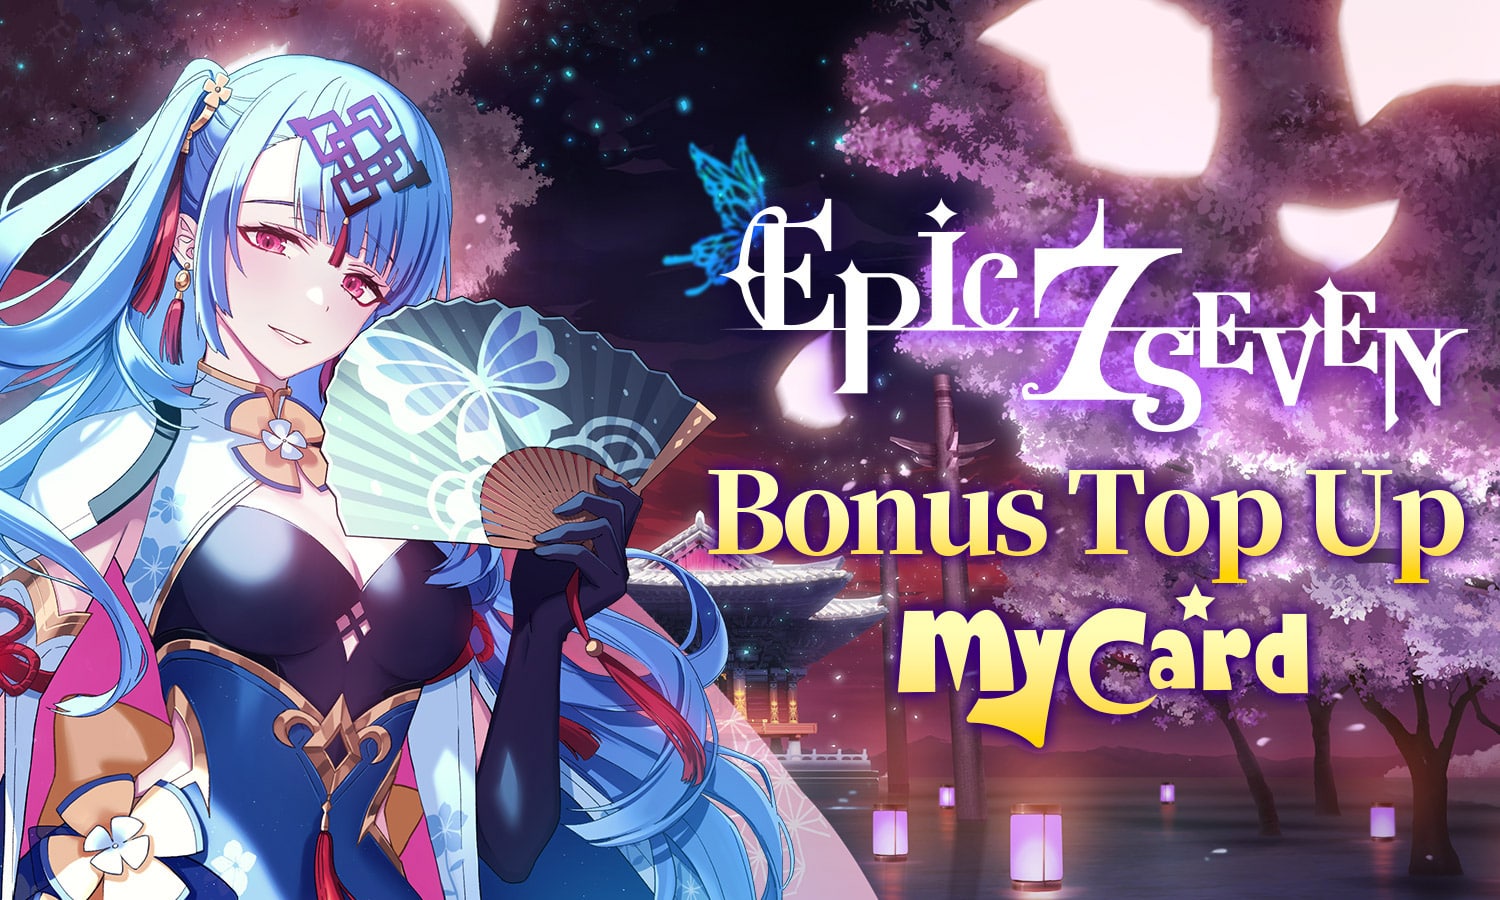   《epic 7 seven》Bonus Top Up MyCard